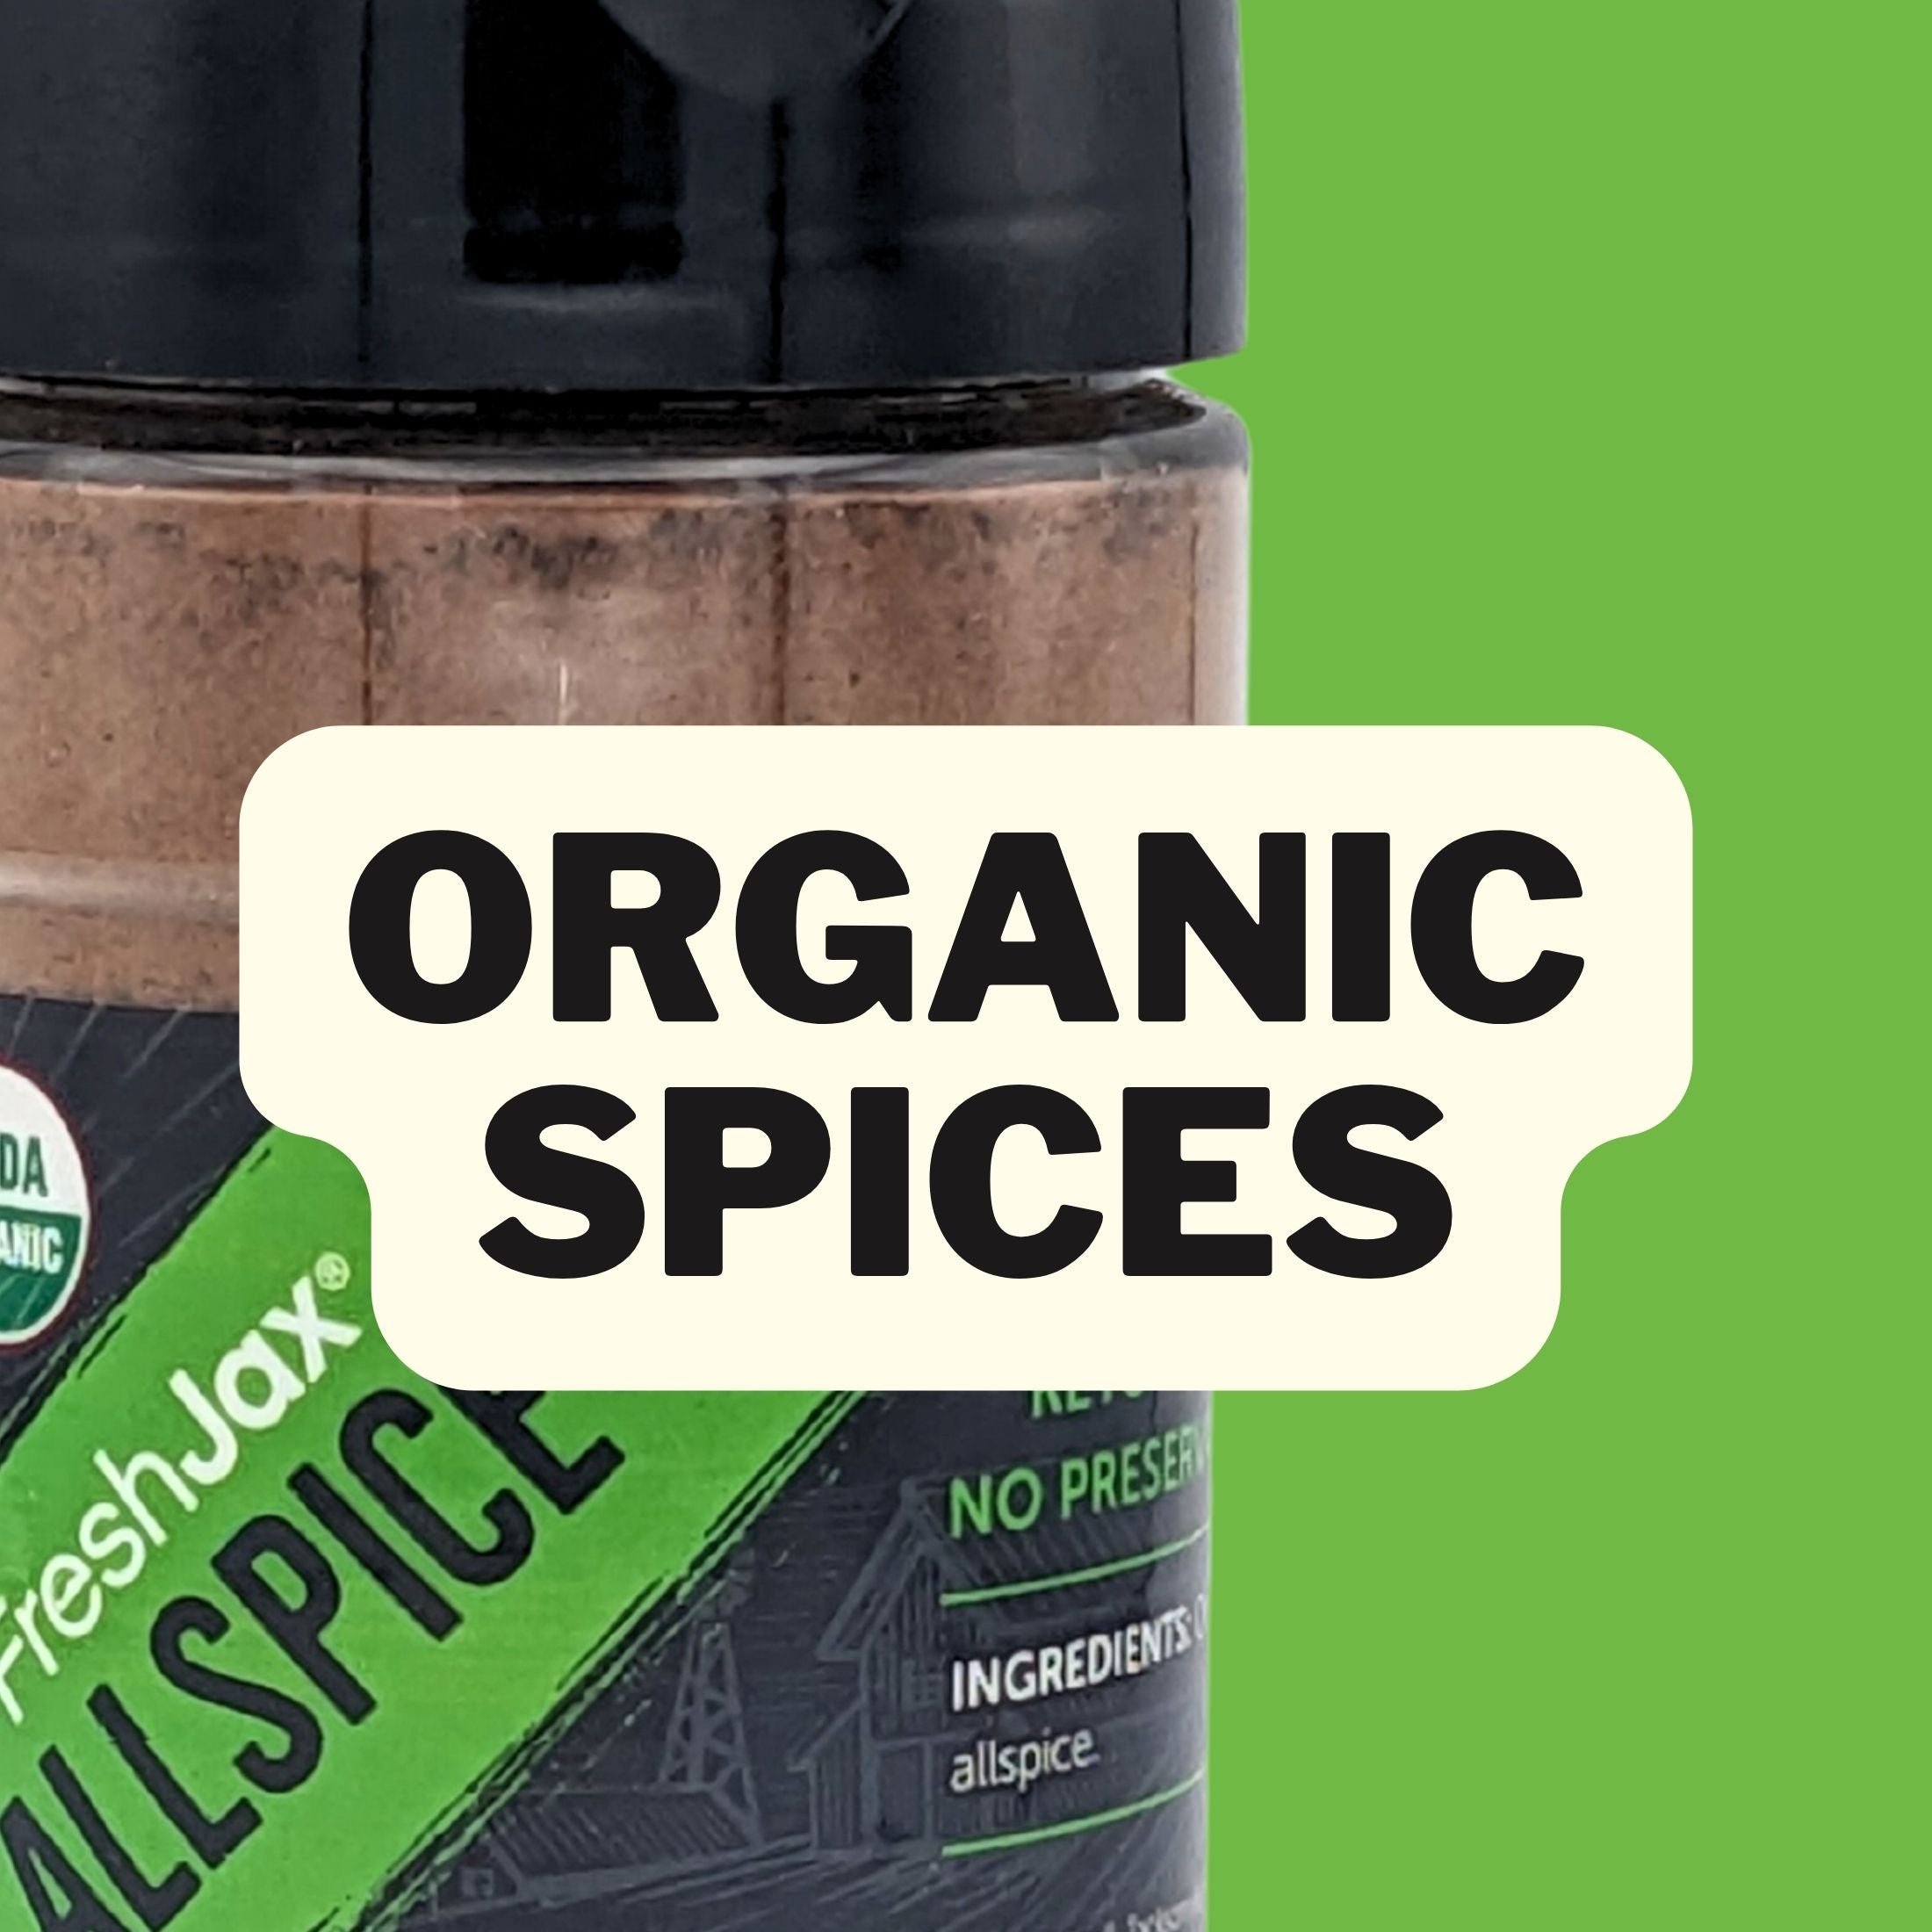 FreshJax Organic Spices